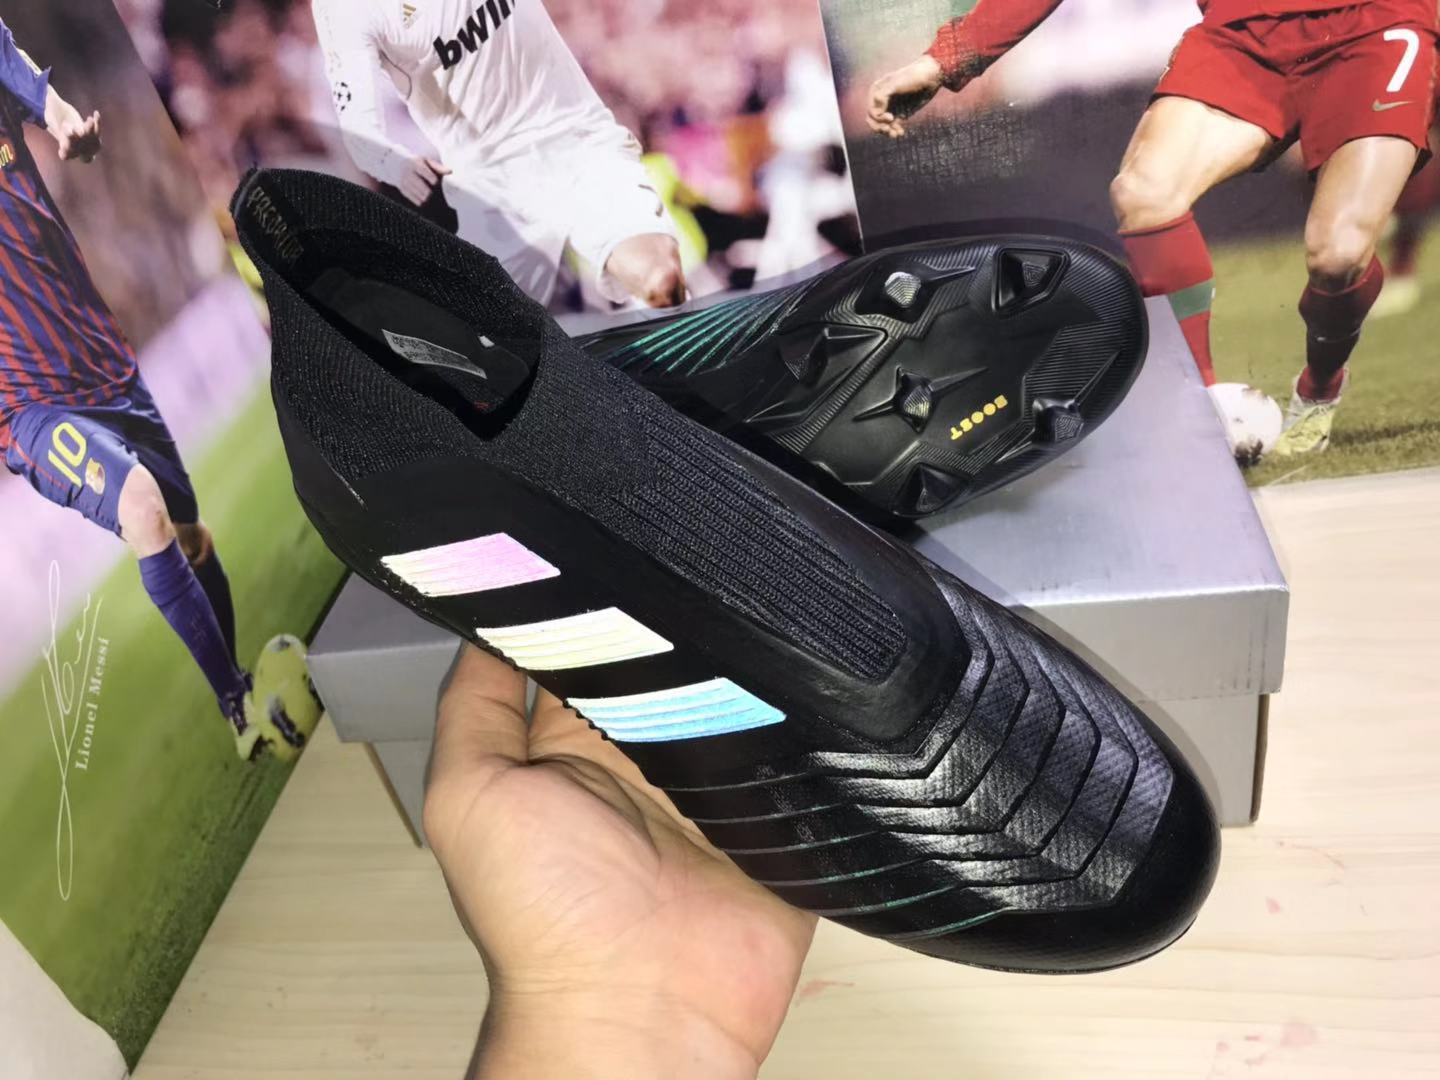 Adidas Predator 19+ FG Triple Black - Sleek and Powerful Football Cleats